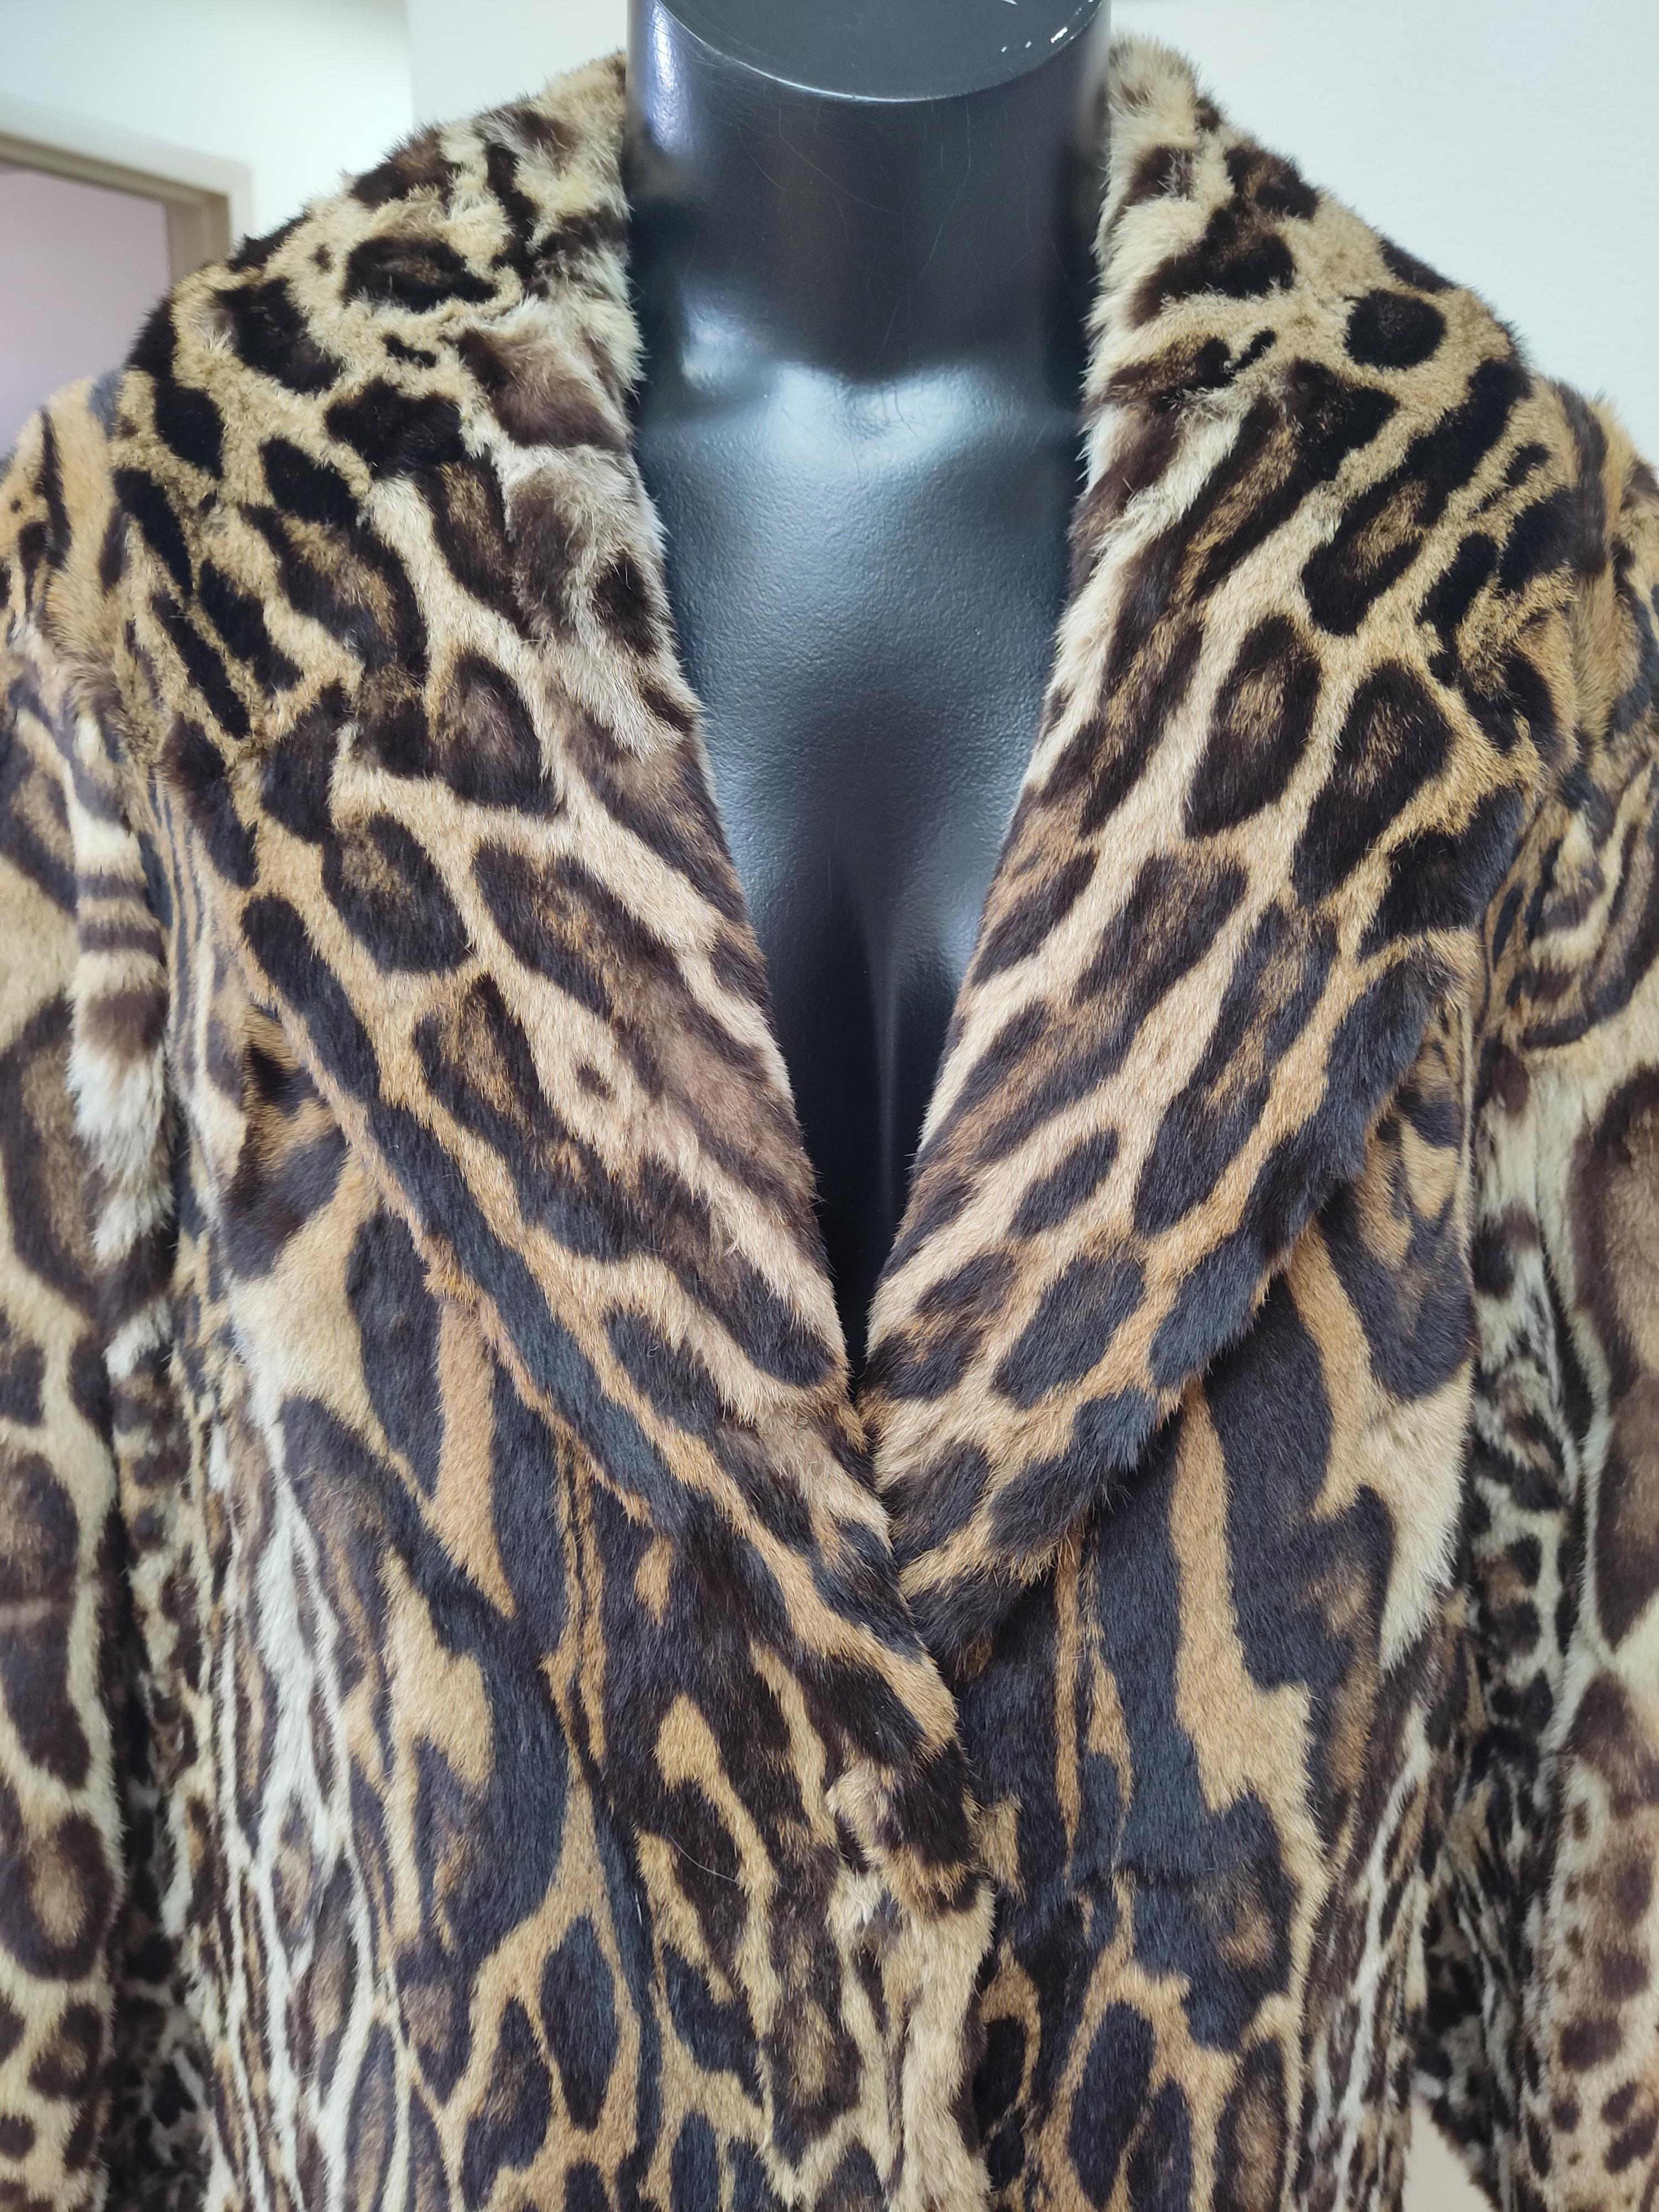 Christian Dior ocelot fur coat size 10 6